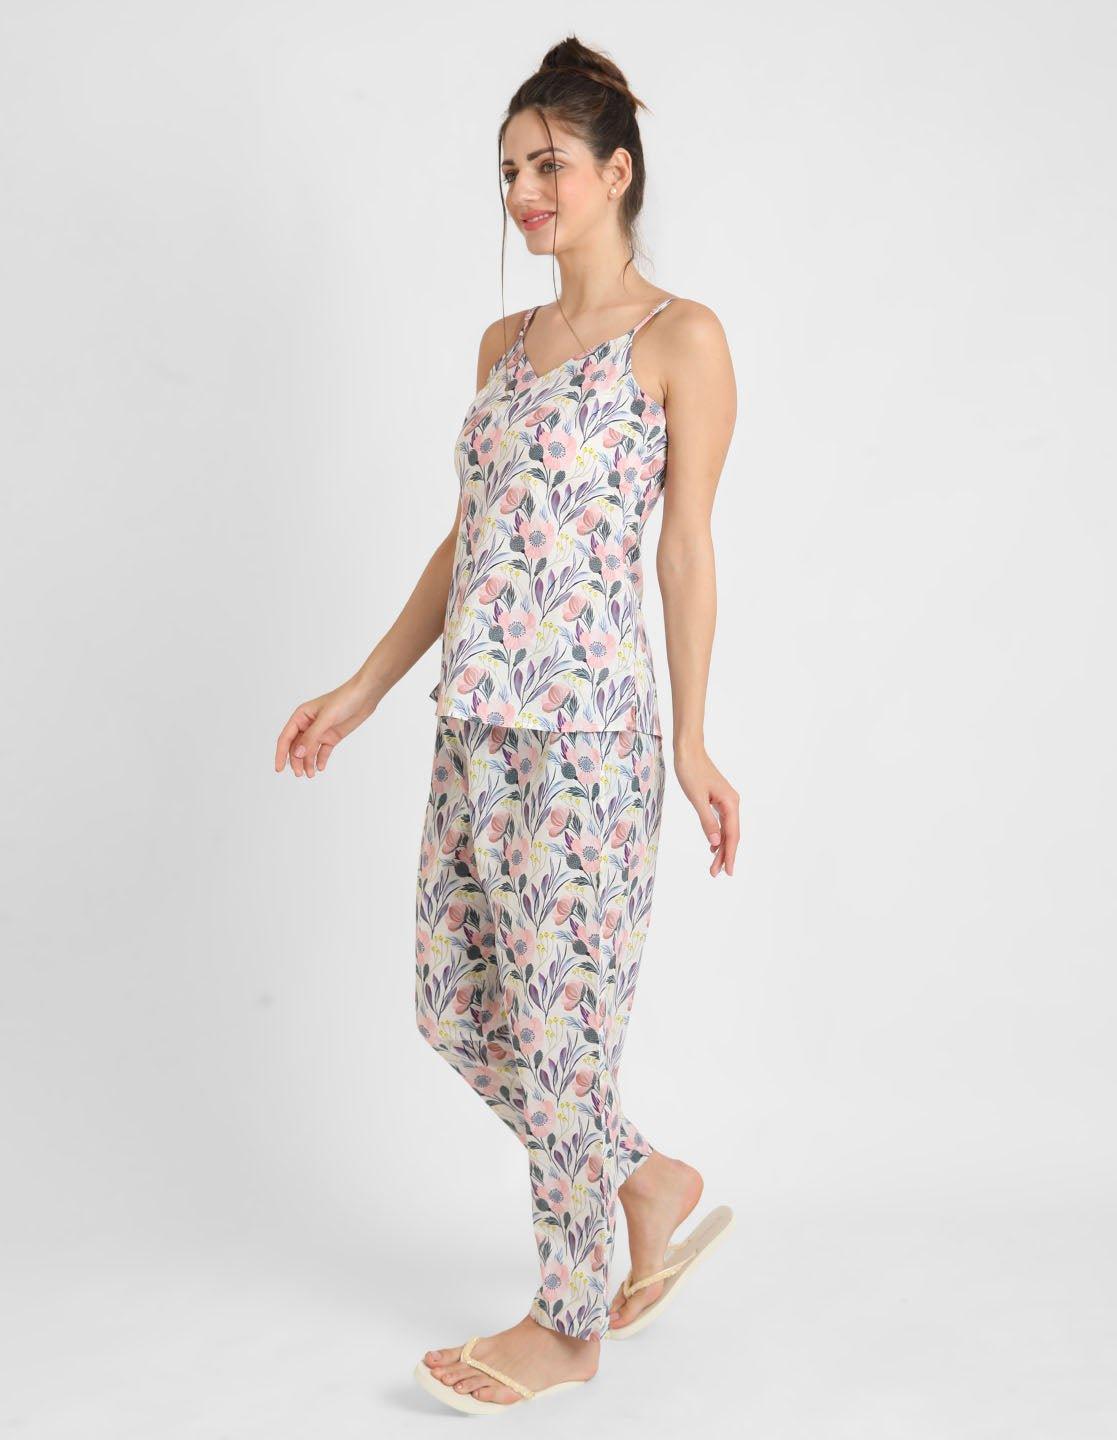 Lunachi Nightwear Women Pajamas Set Tank Top Shirt & Cute Print Pjs Pants -  Two Piece Sleepwear Sets for Womens (135-Adele-XS) at  Women's  Clothing store